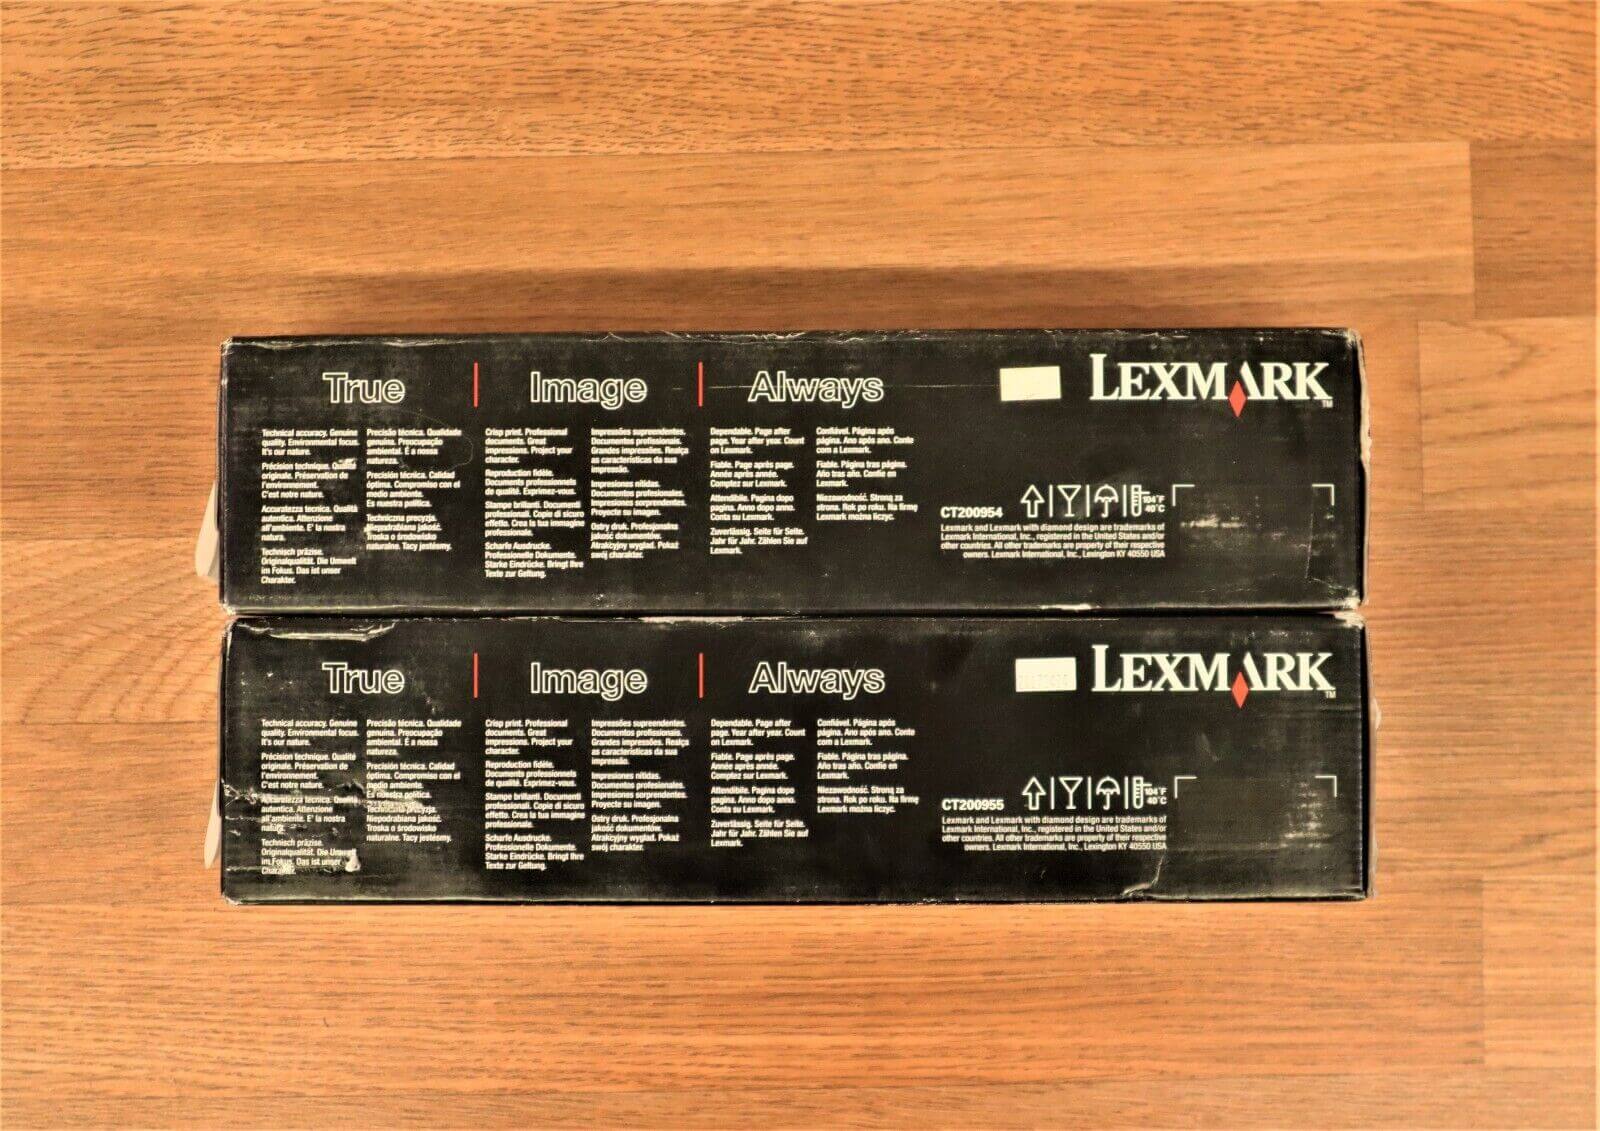 2 Lexmark C935 M&Y Toner Cartridges, C930H2MG, C930H2YG For C935 Same Day Ship!! - copier-clearance-center